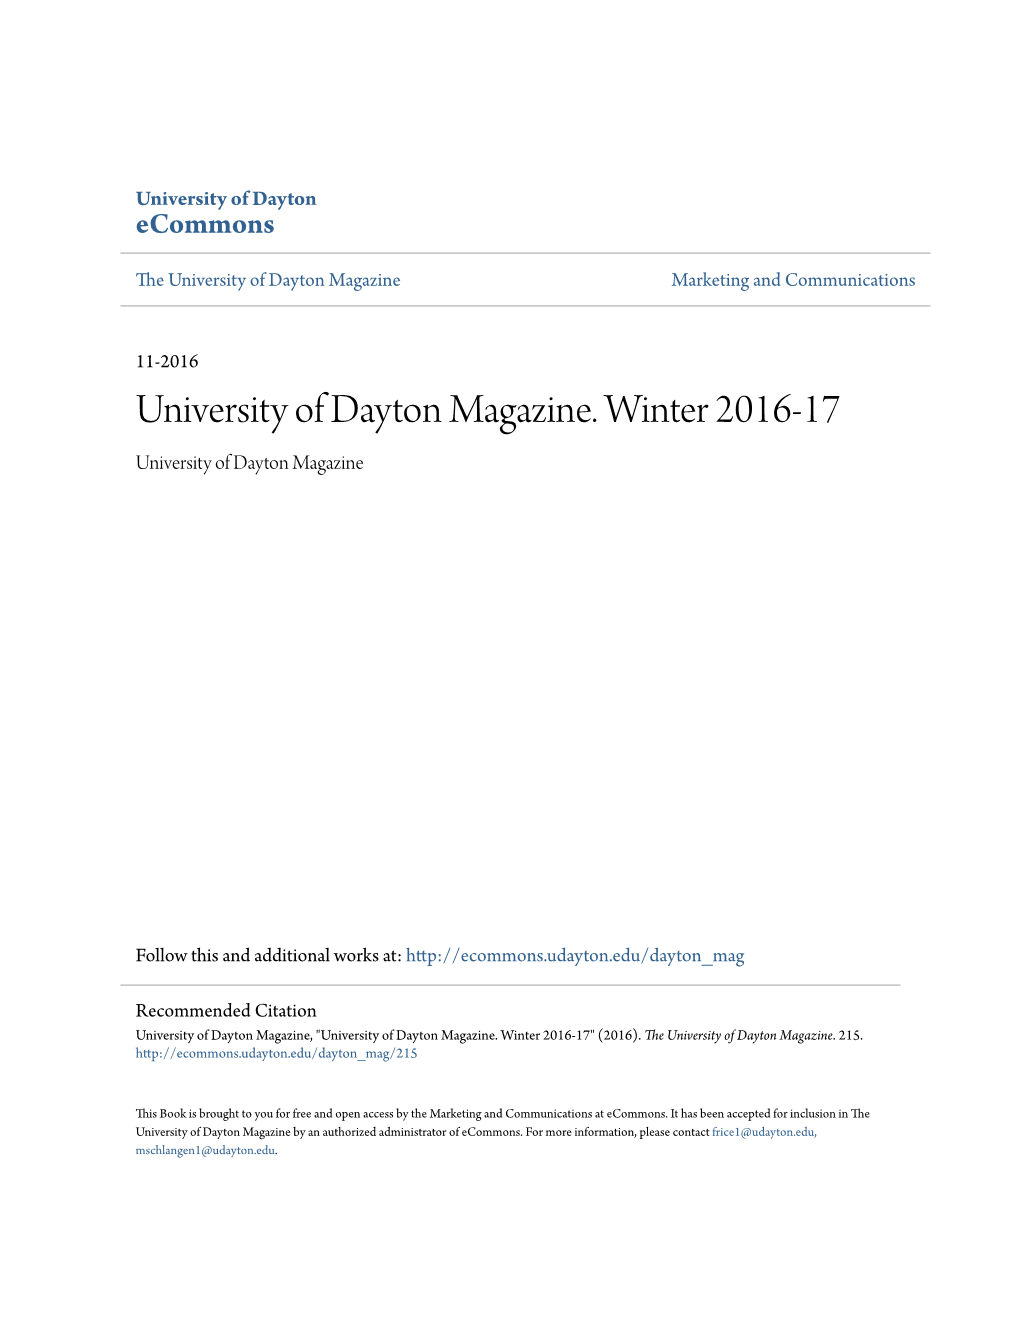 University of Dayton Magazine. Winter 2016-17 University of Dayton Magazine